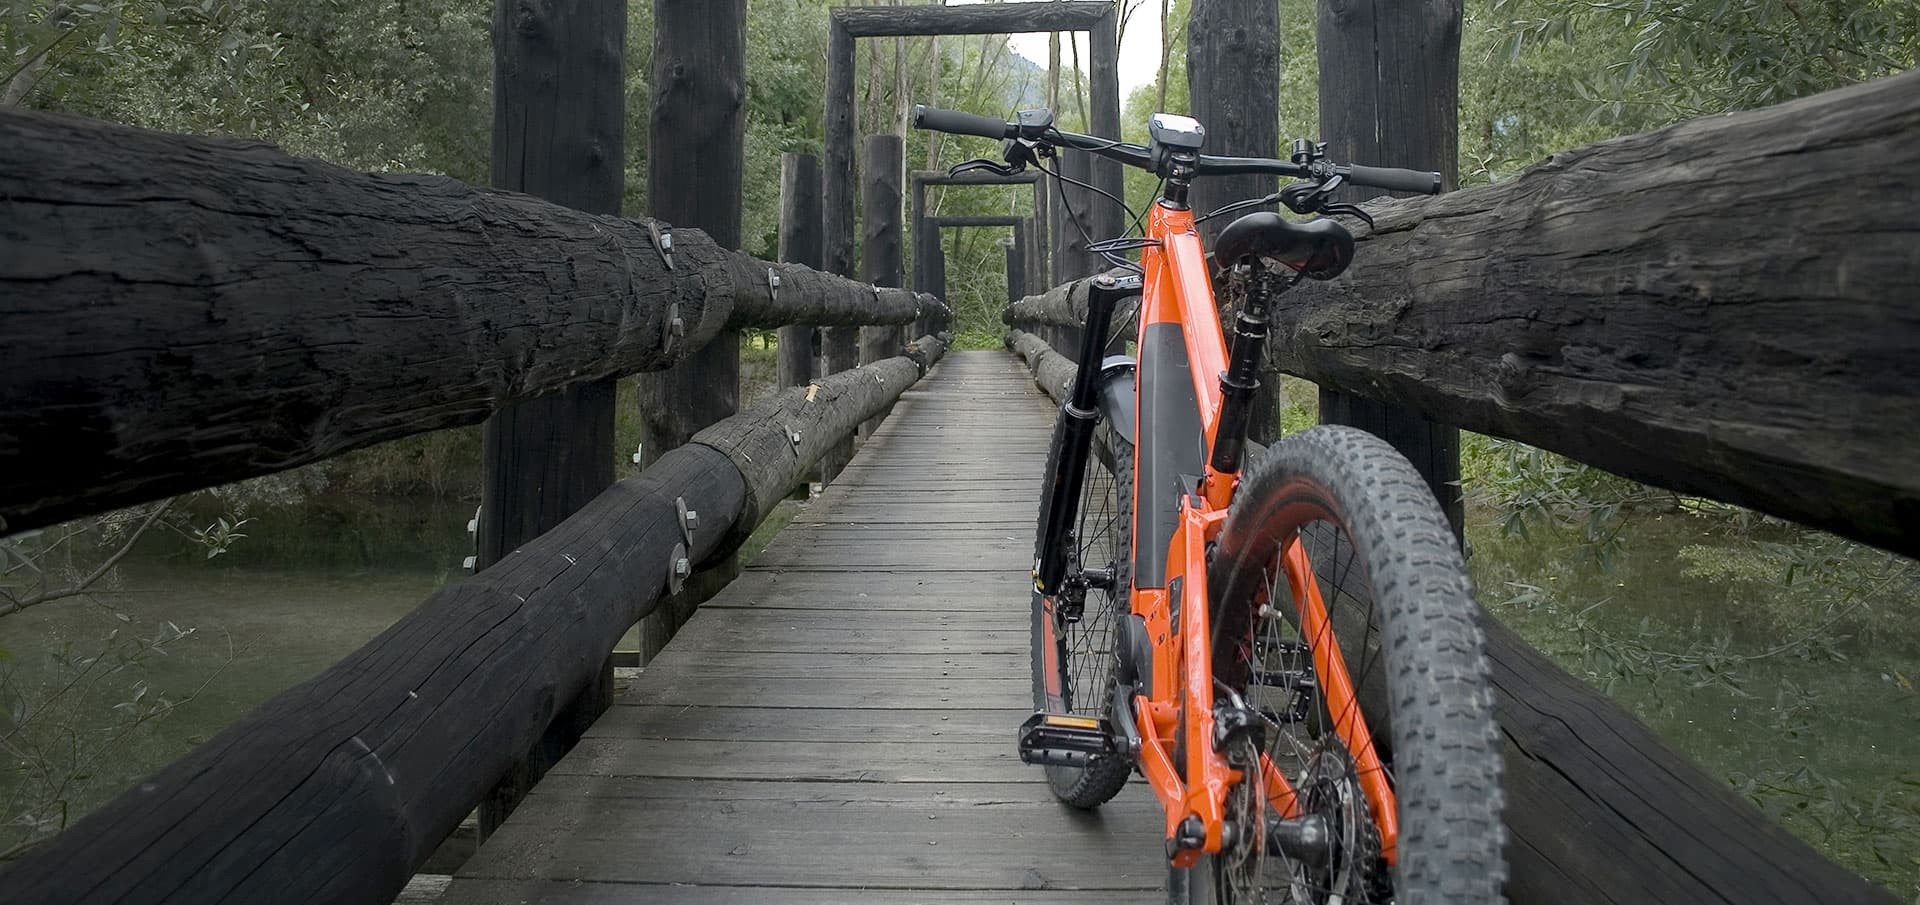 Bike auf Holzbrücke - Fluchtpunktperspektive